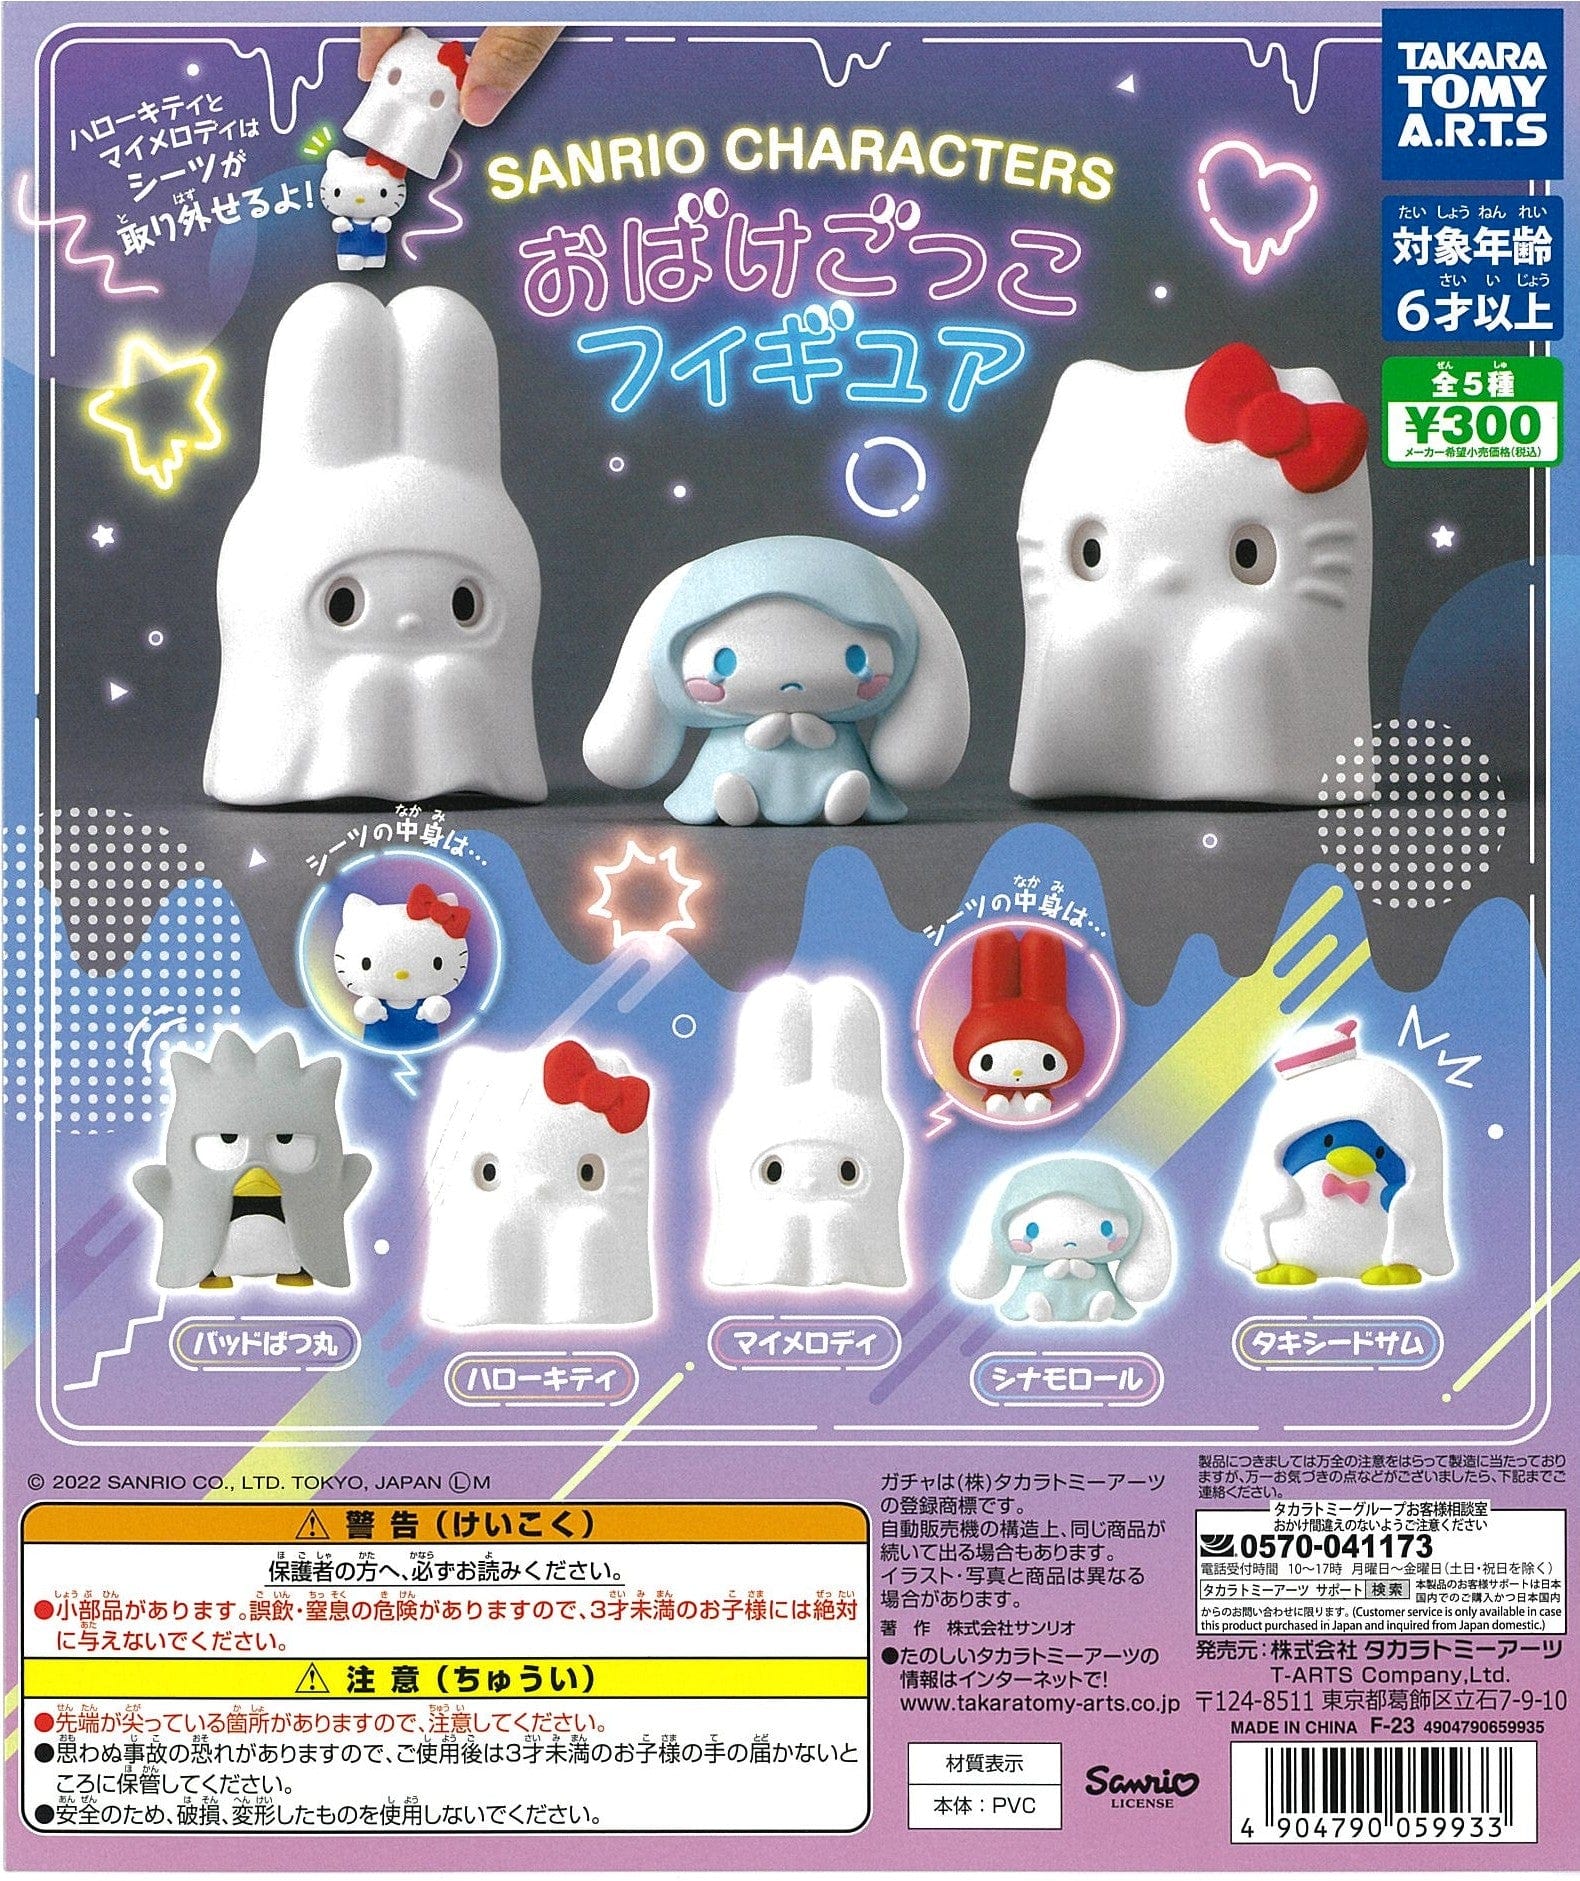 TAKARA TOMY ARTS CP2433 Sanrio Characters Ghost Figure